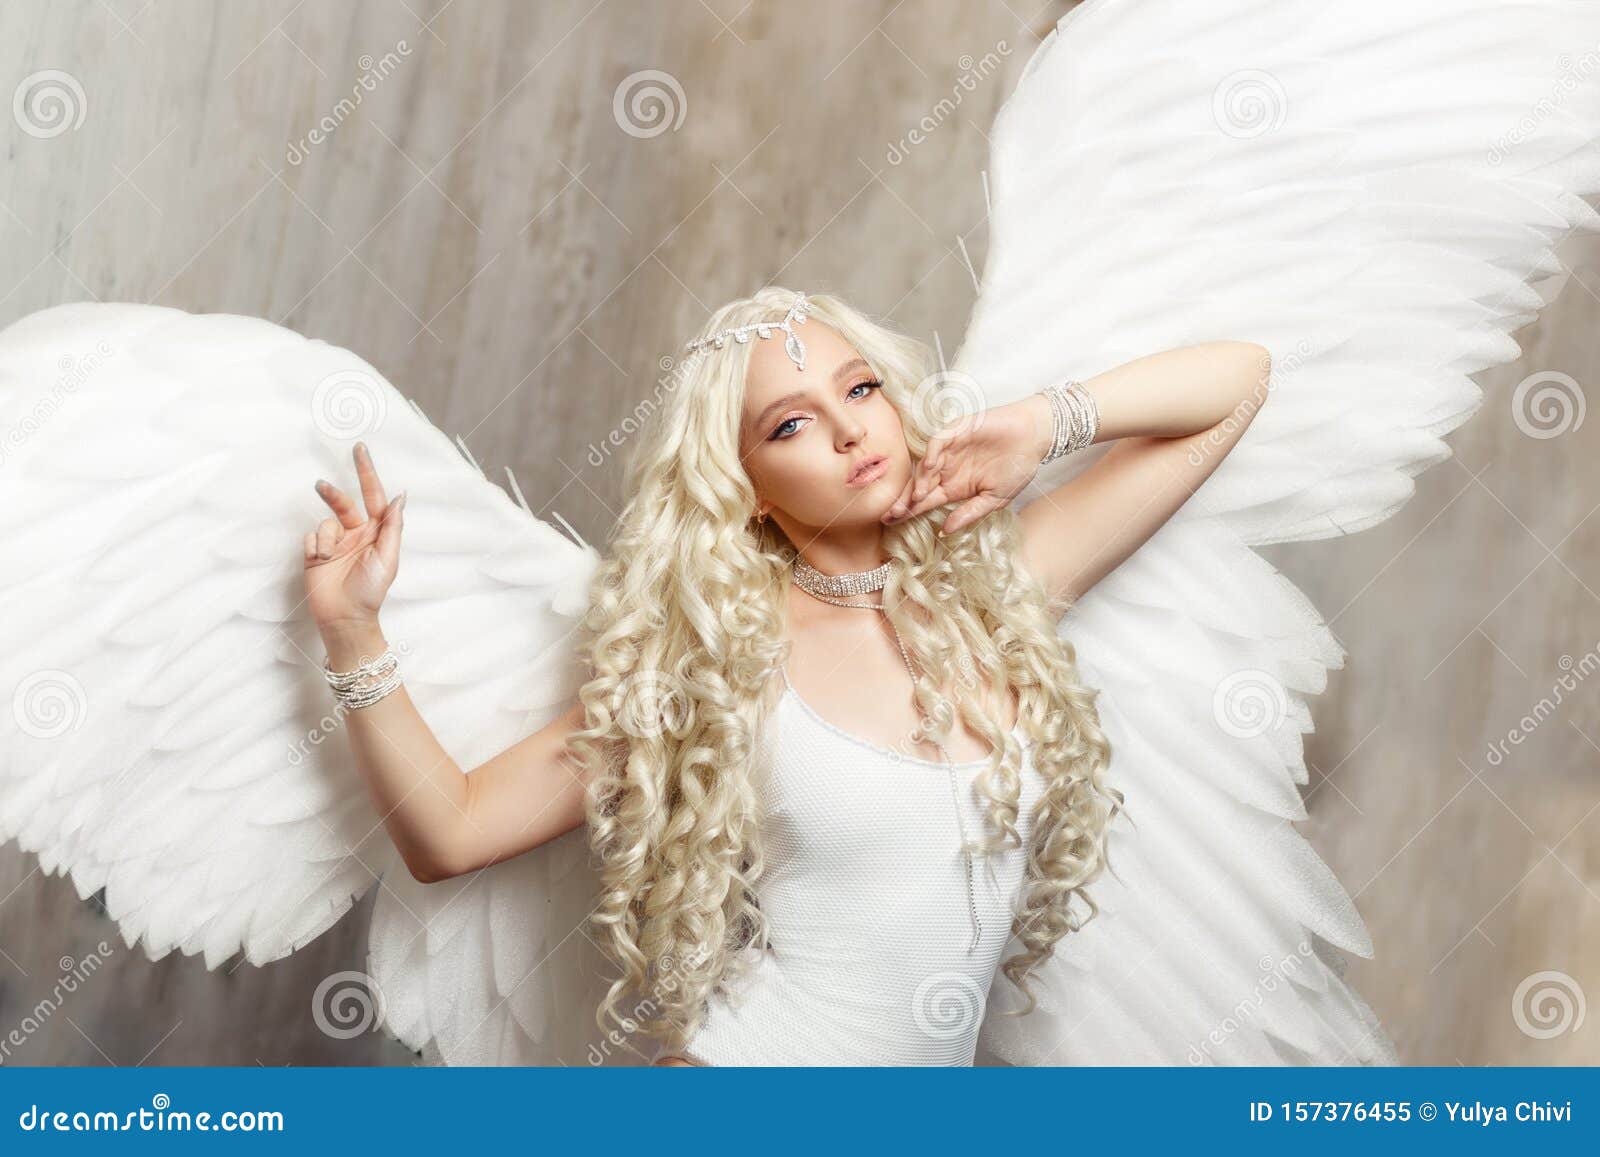 big beautiful woman angel